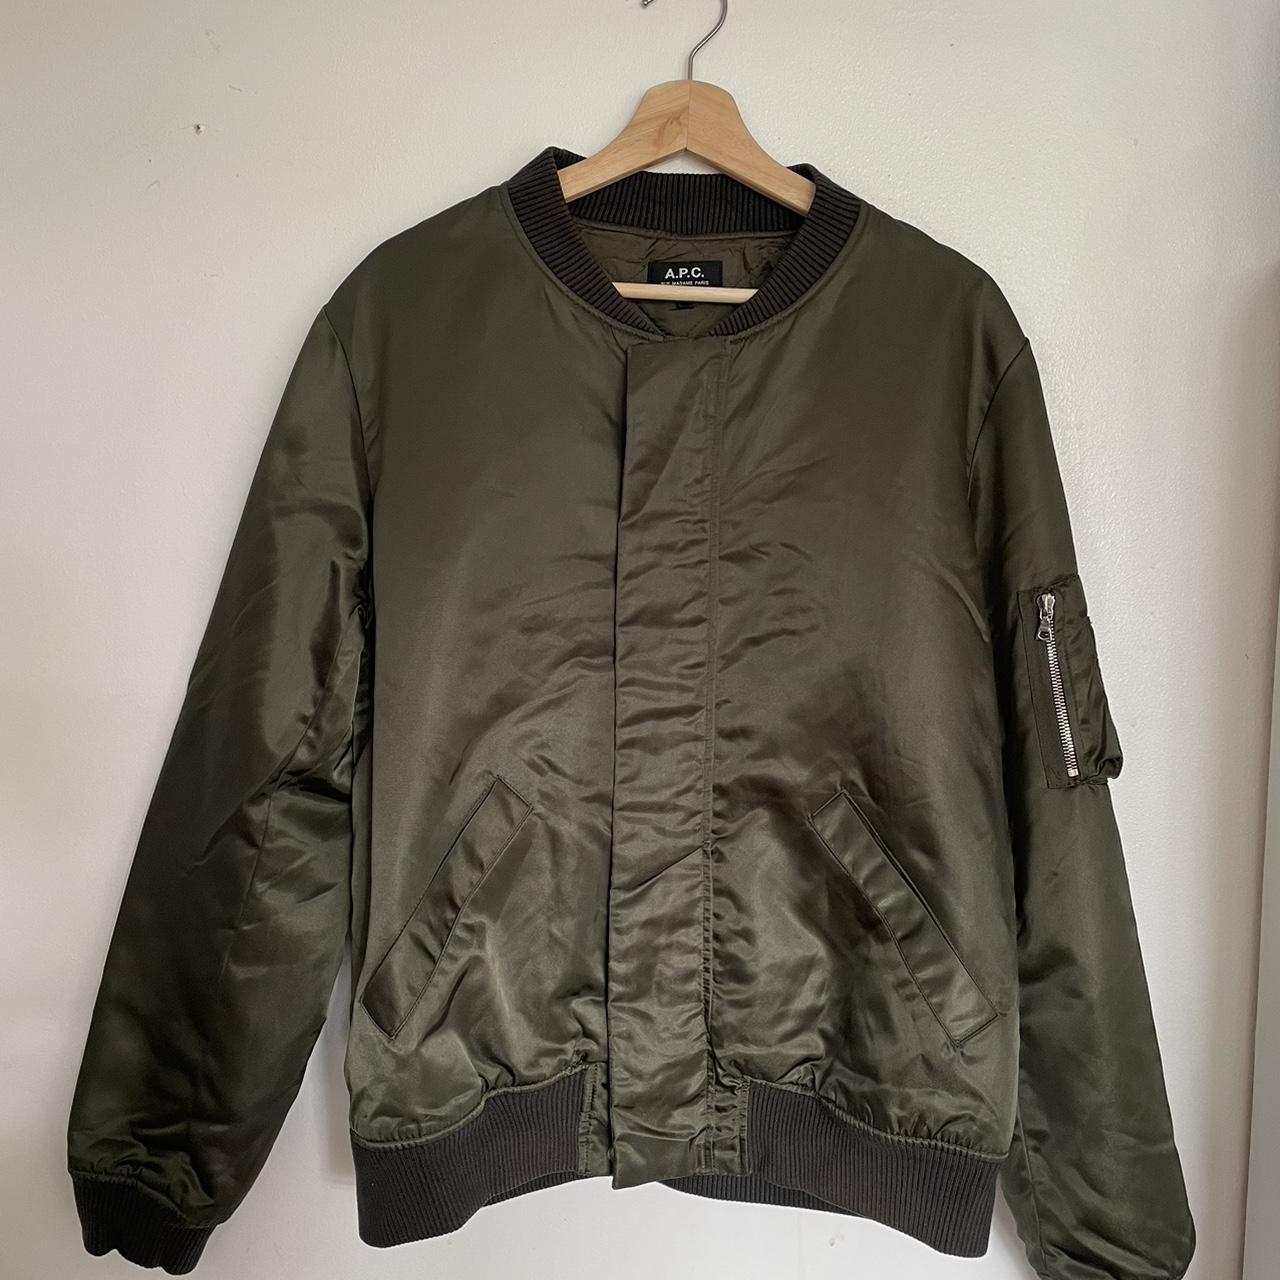 A.P.C. Men’s bomber jacket in khaki green - large,... - Depop